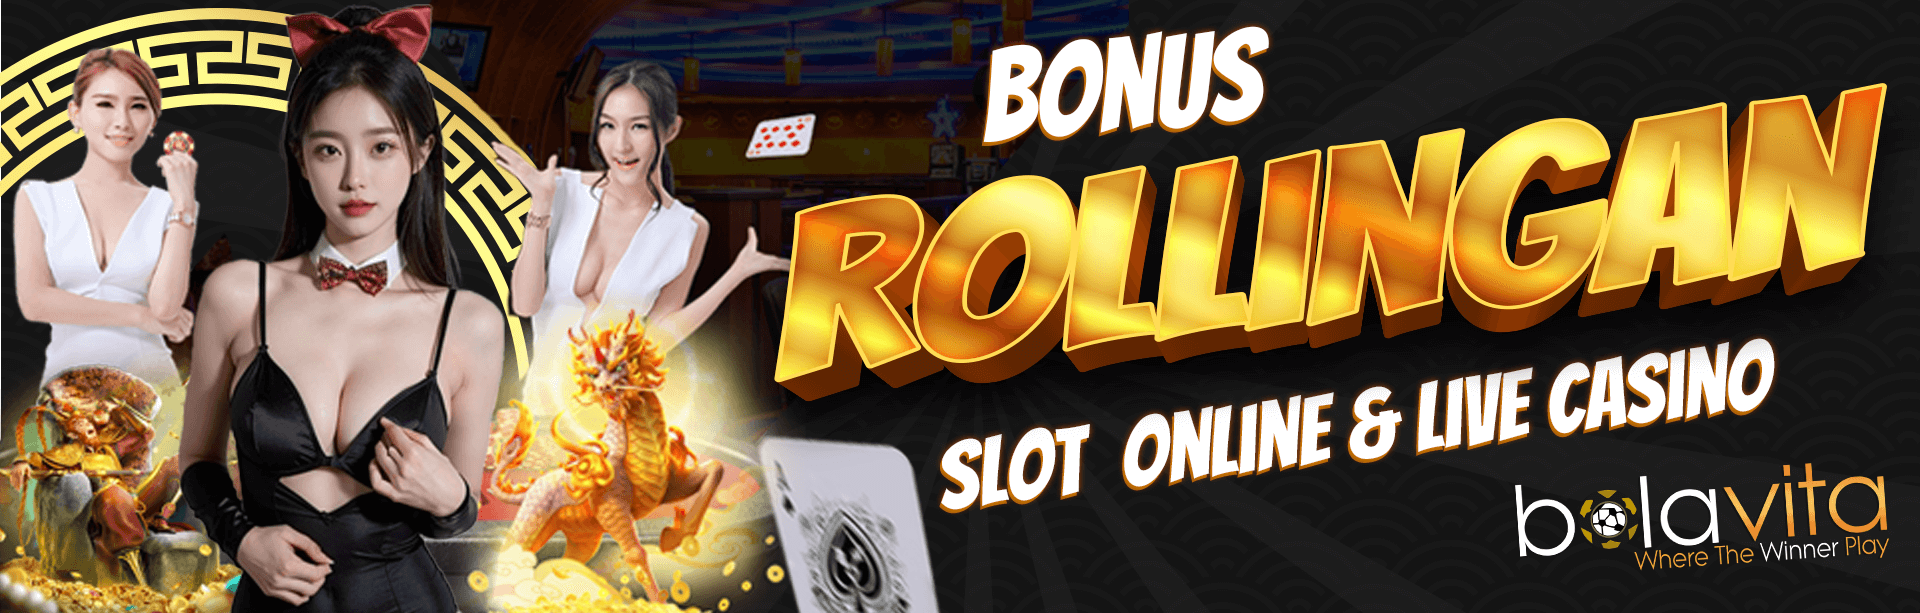 Bonus Rollingan Slot Online & Live Casino